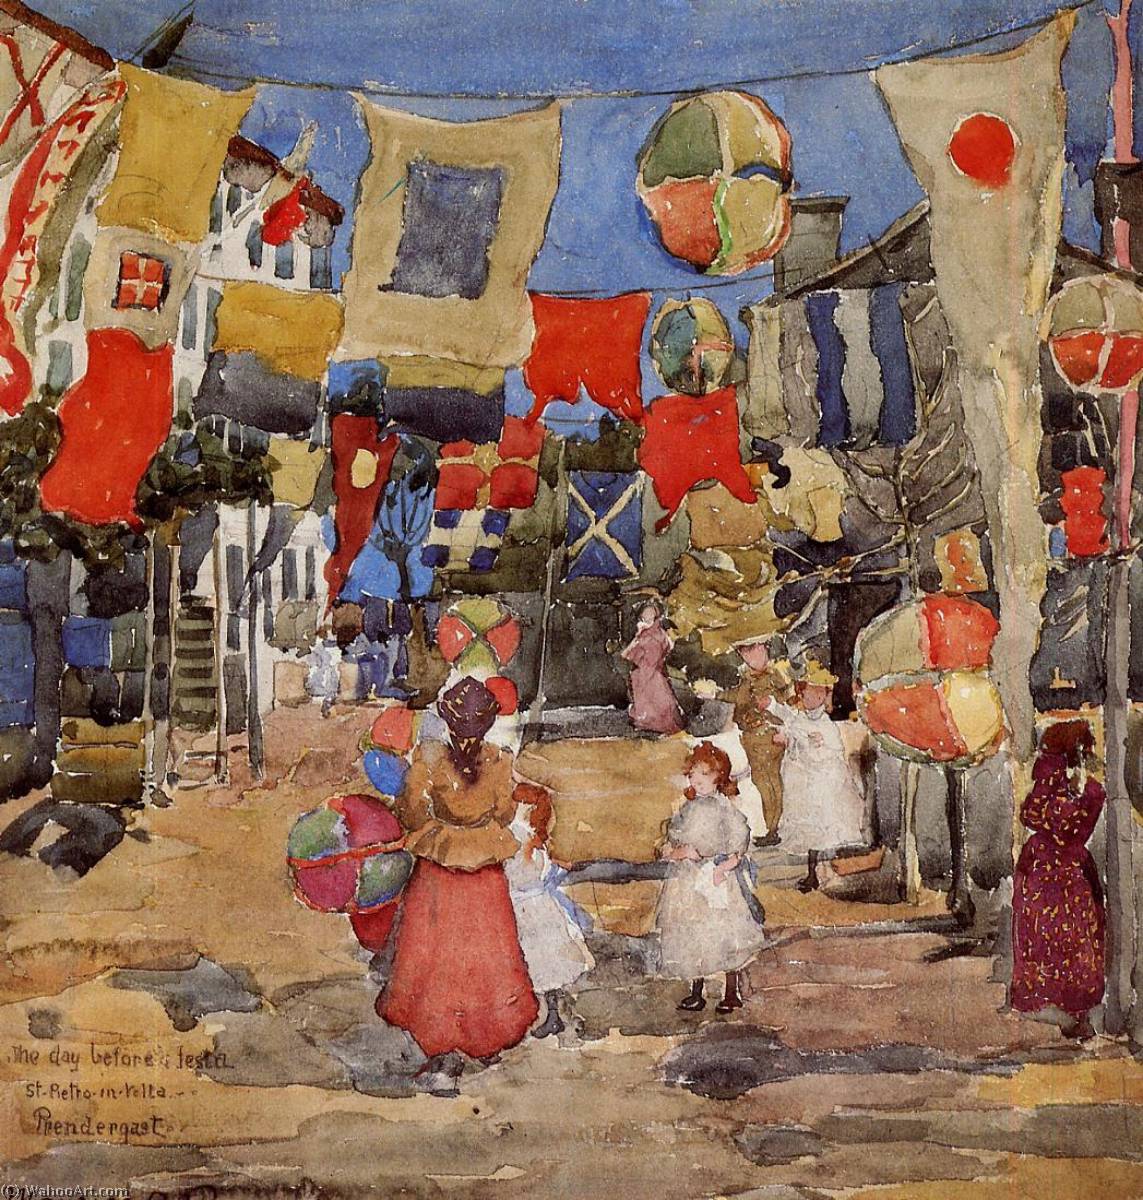 WikiOO.org - Encyclopedia of Fine Arts - Malba, Artwork Maurice Brazil Prendergast - Fiesta Venice S. Pietro in Volta (also known as The Day Before the Fiesta, St. Pietro in Volte)